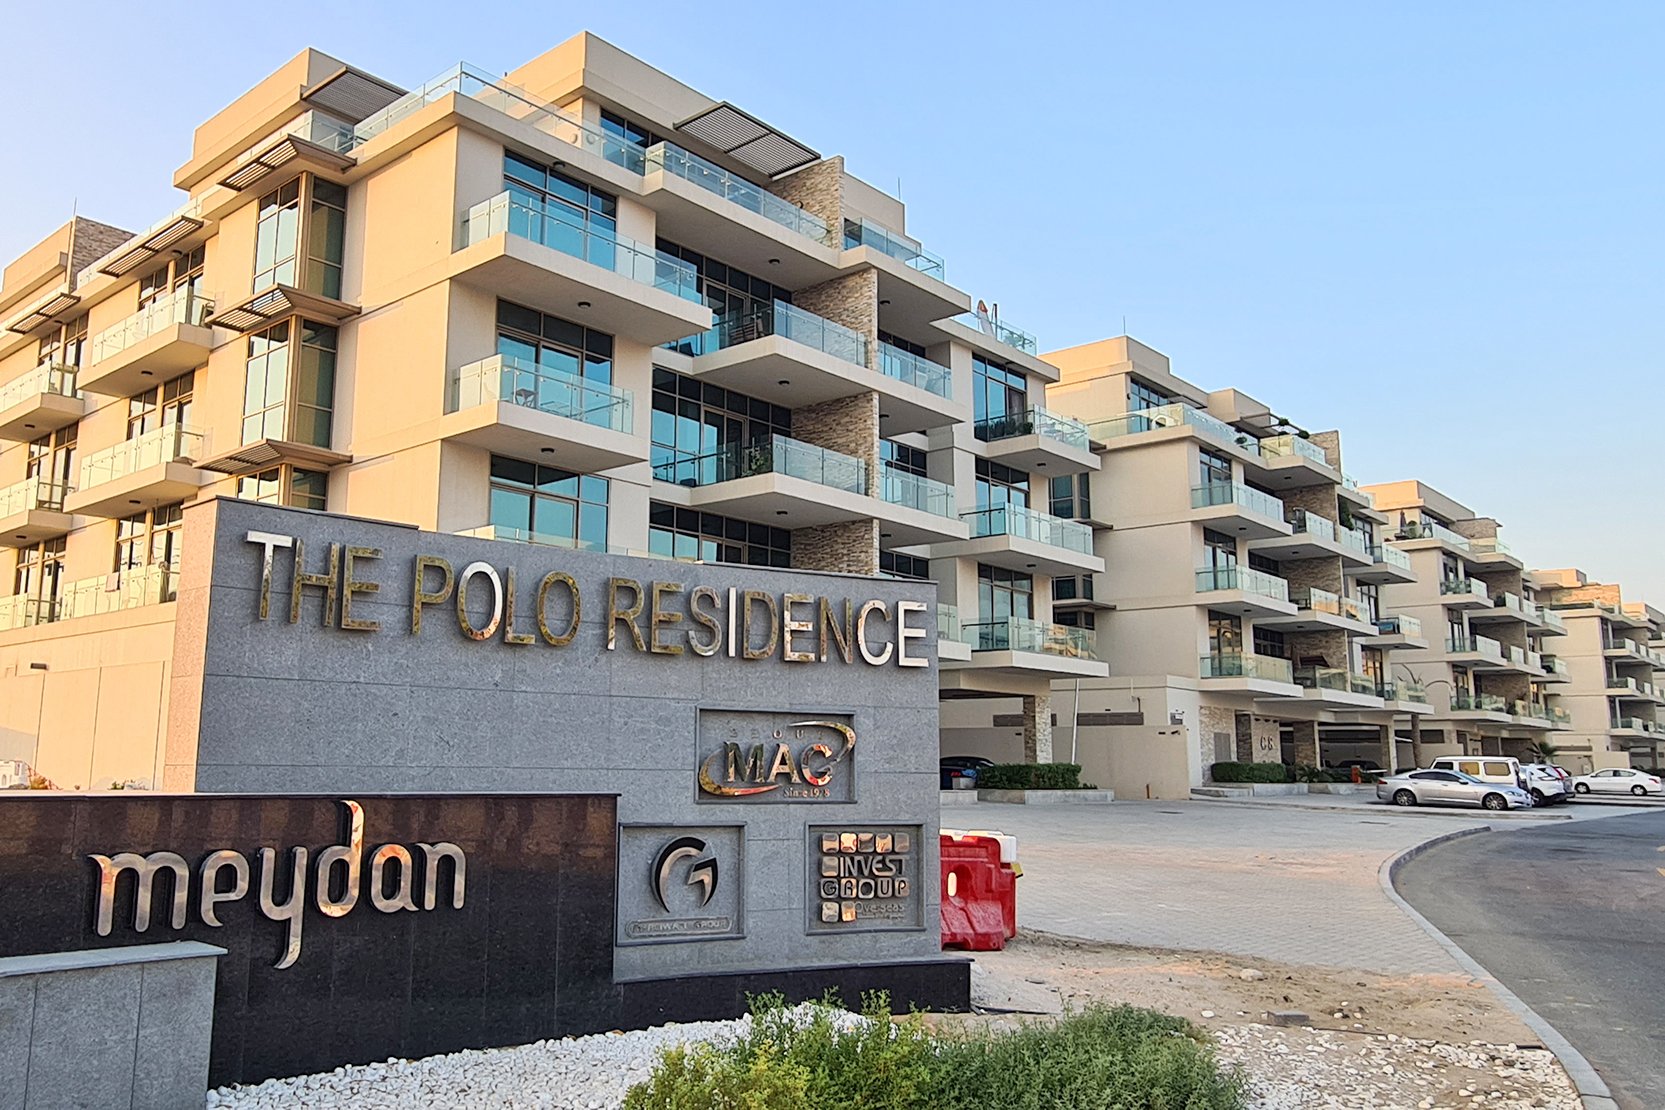 the-polo-residence-2